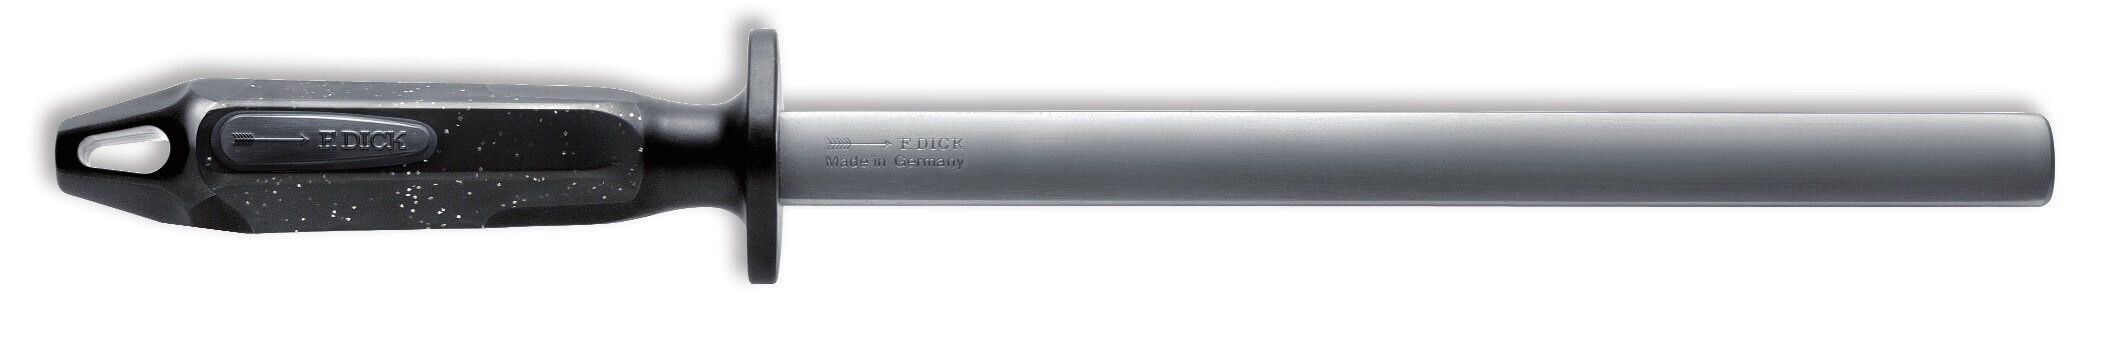 Fusil À Aiguiser en Inox Diamanté - 255 mm - Dick - Fourniresto